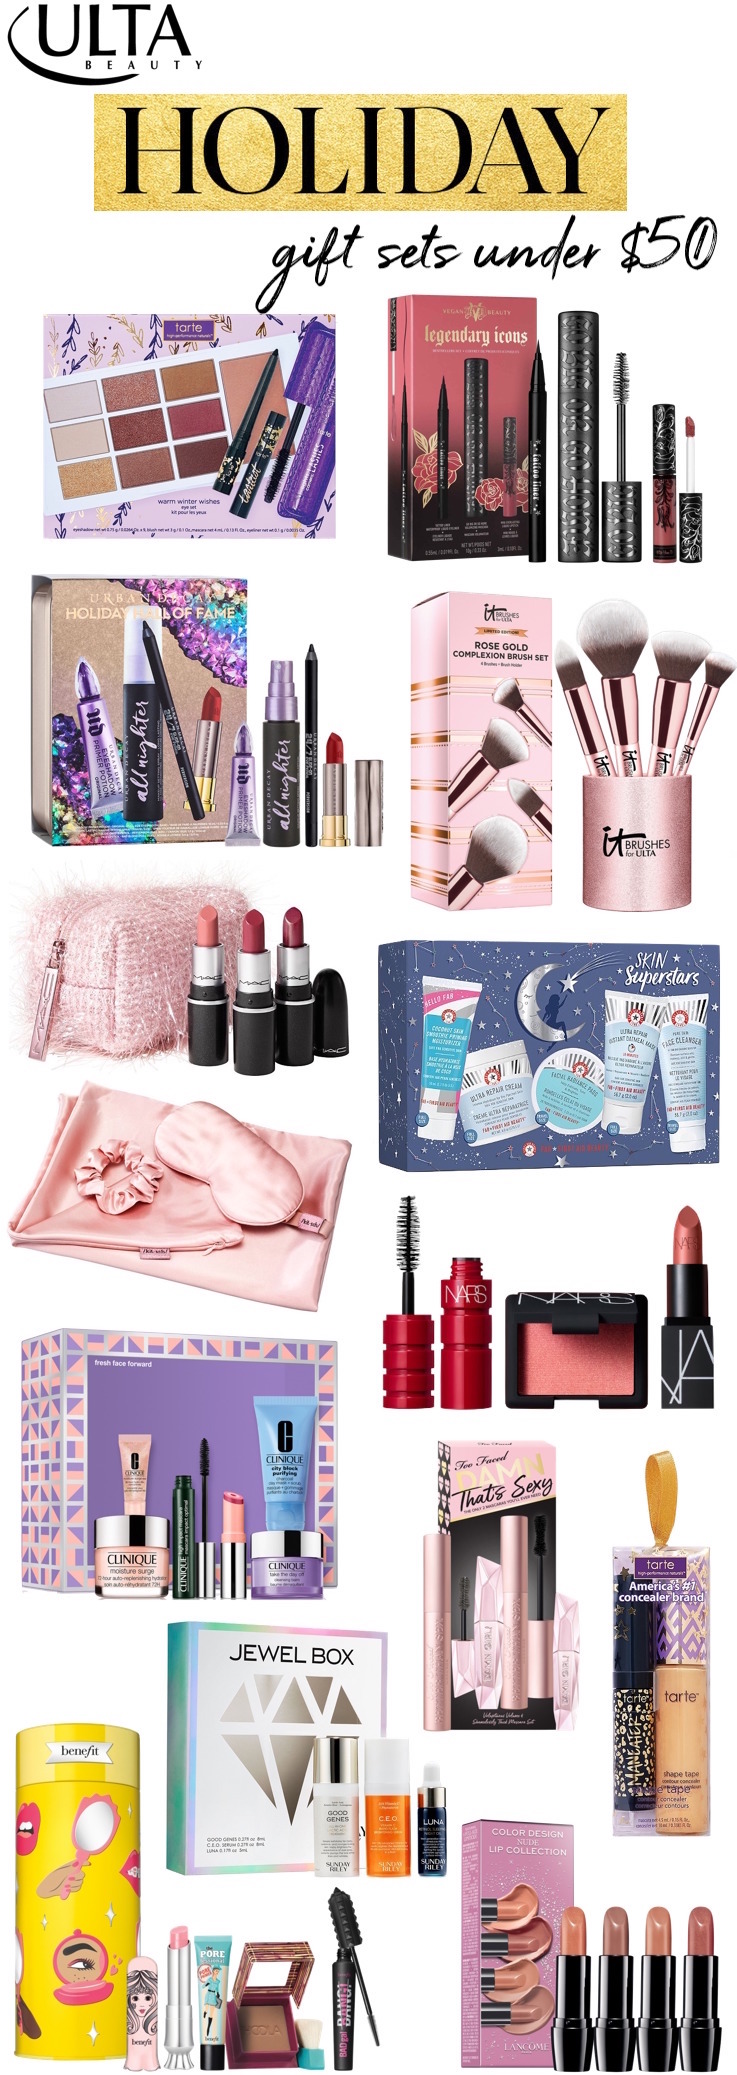 ULTA Holiday 2020: Best Beauty Gift Sets Under $50